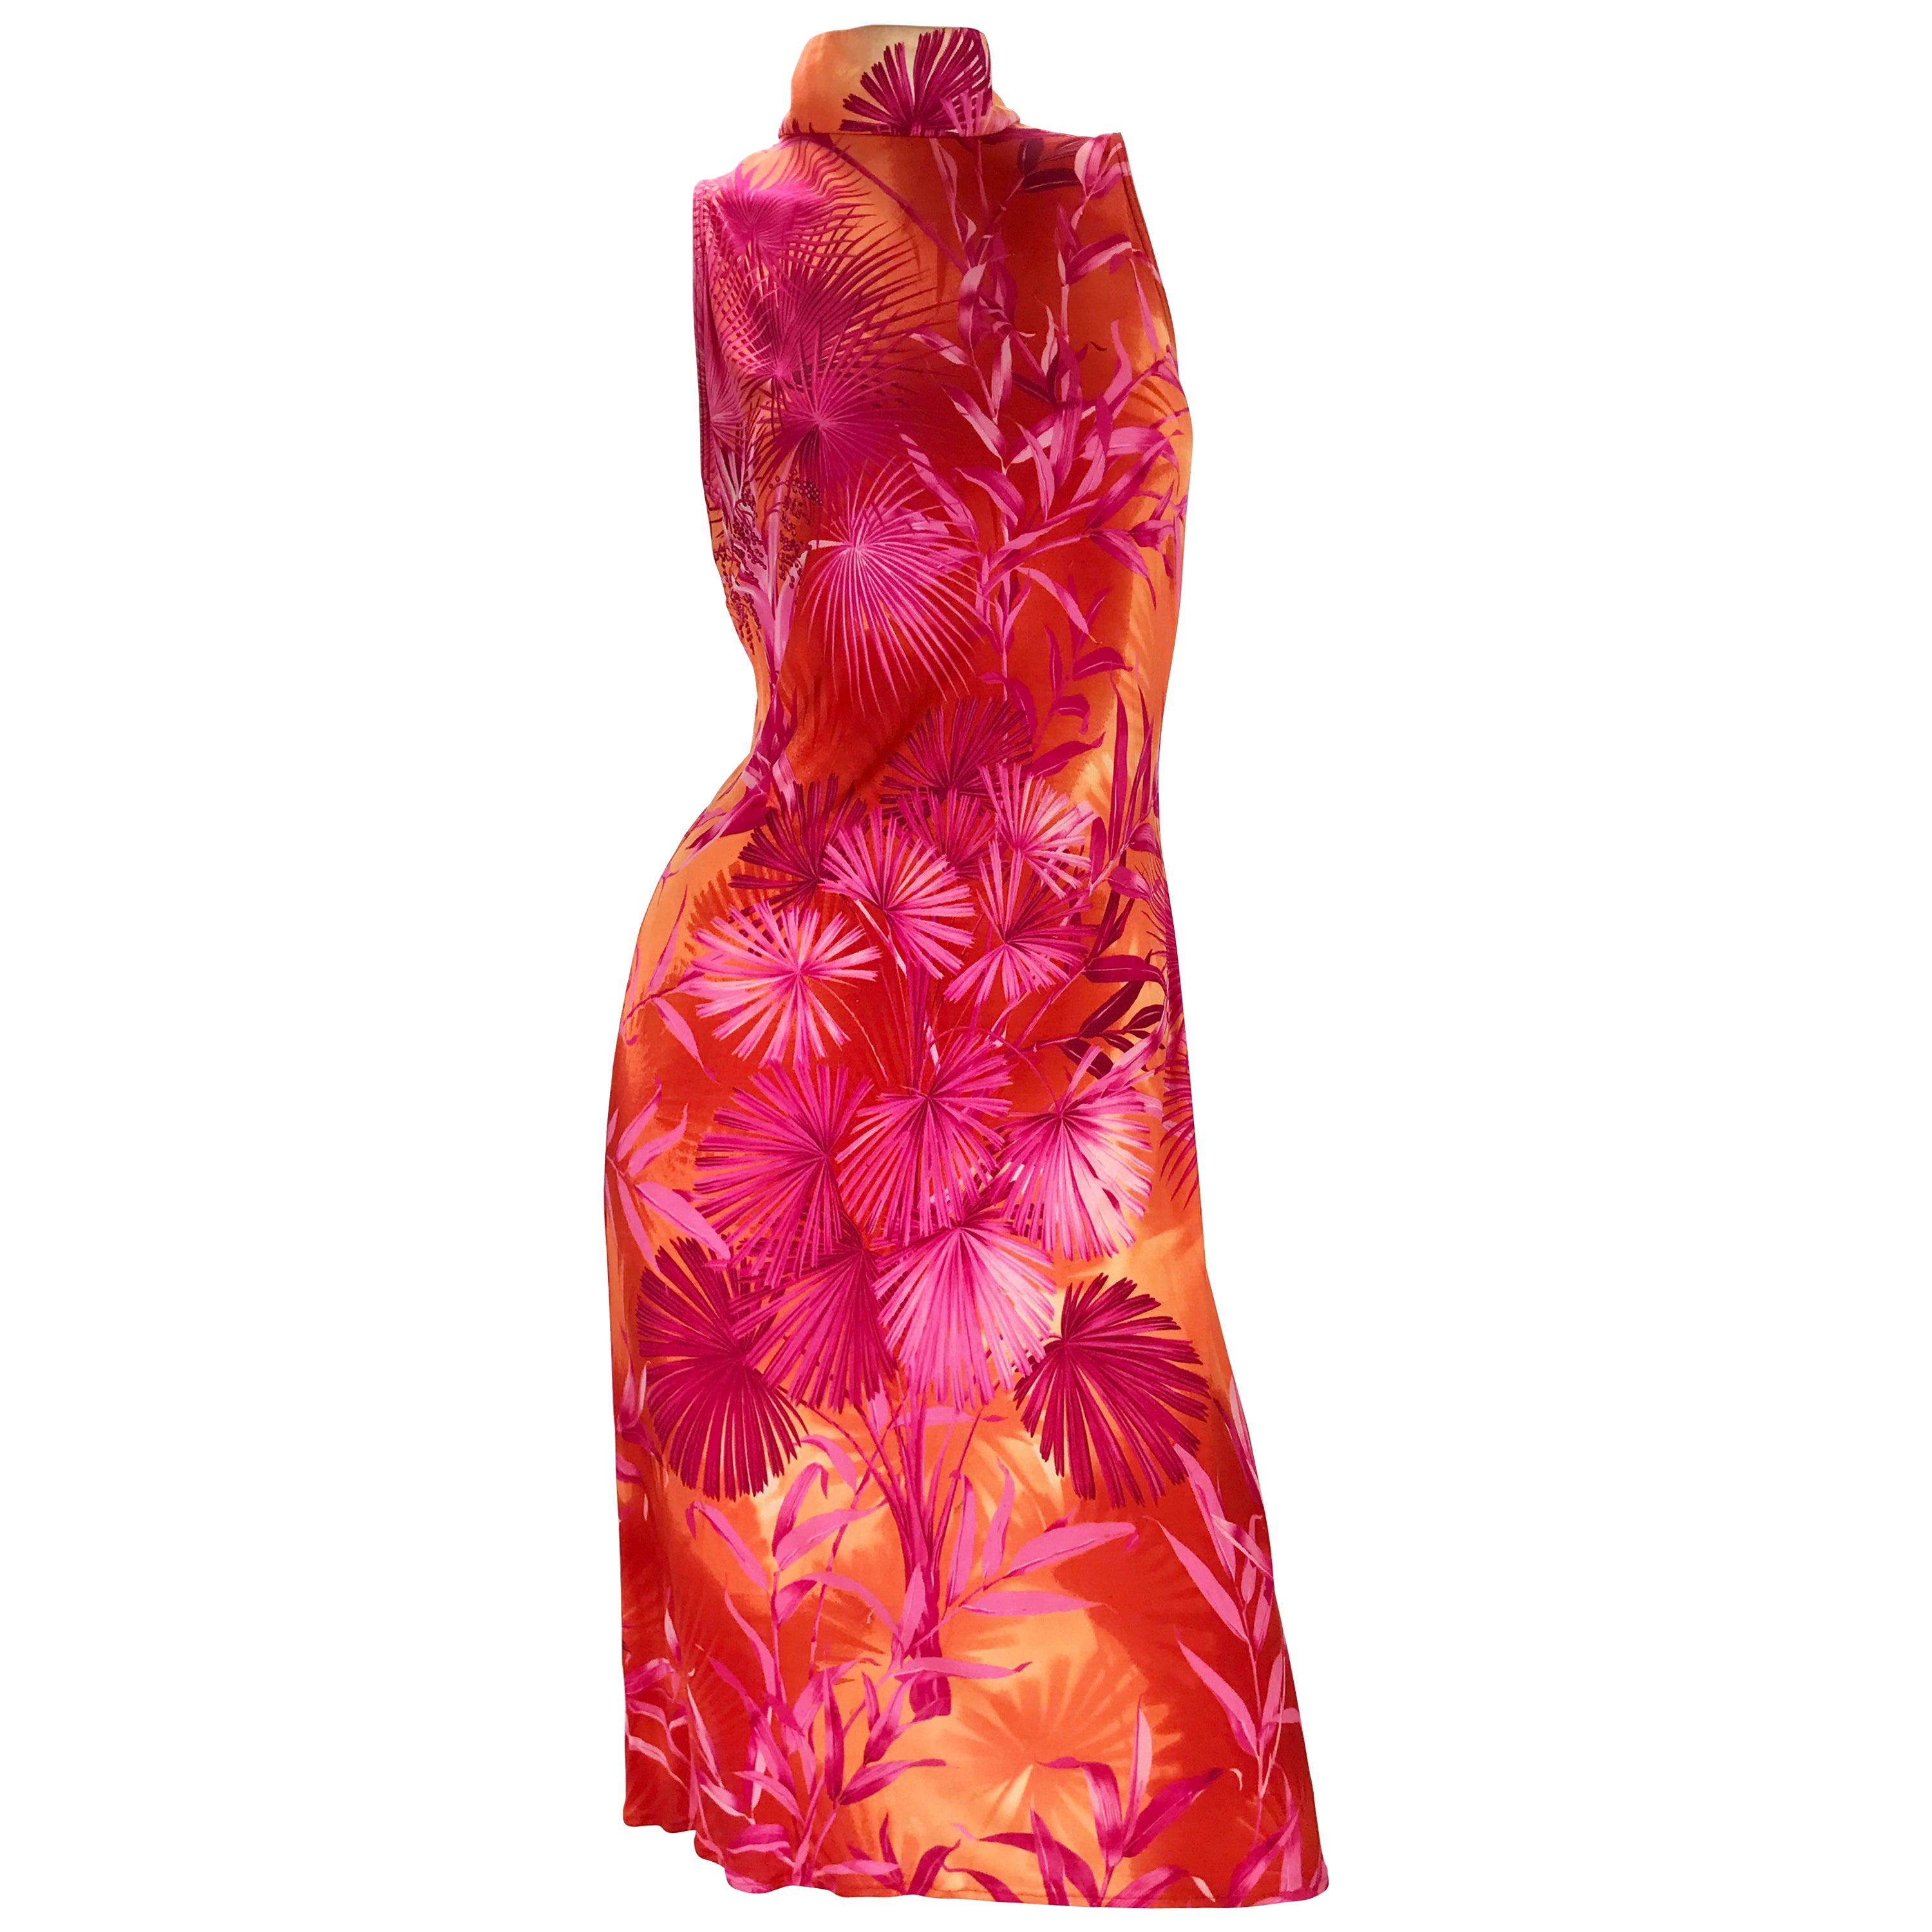 S/S 2000 Vintage Gianni Versace Couture Jungle Print Dress